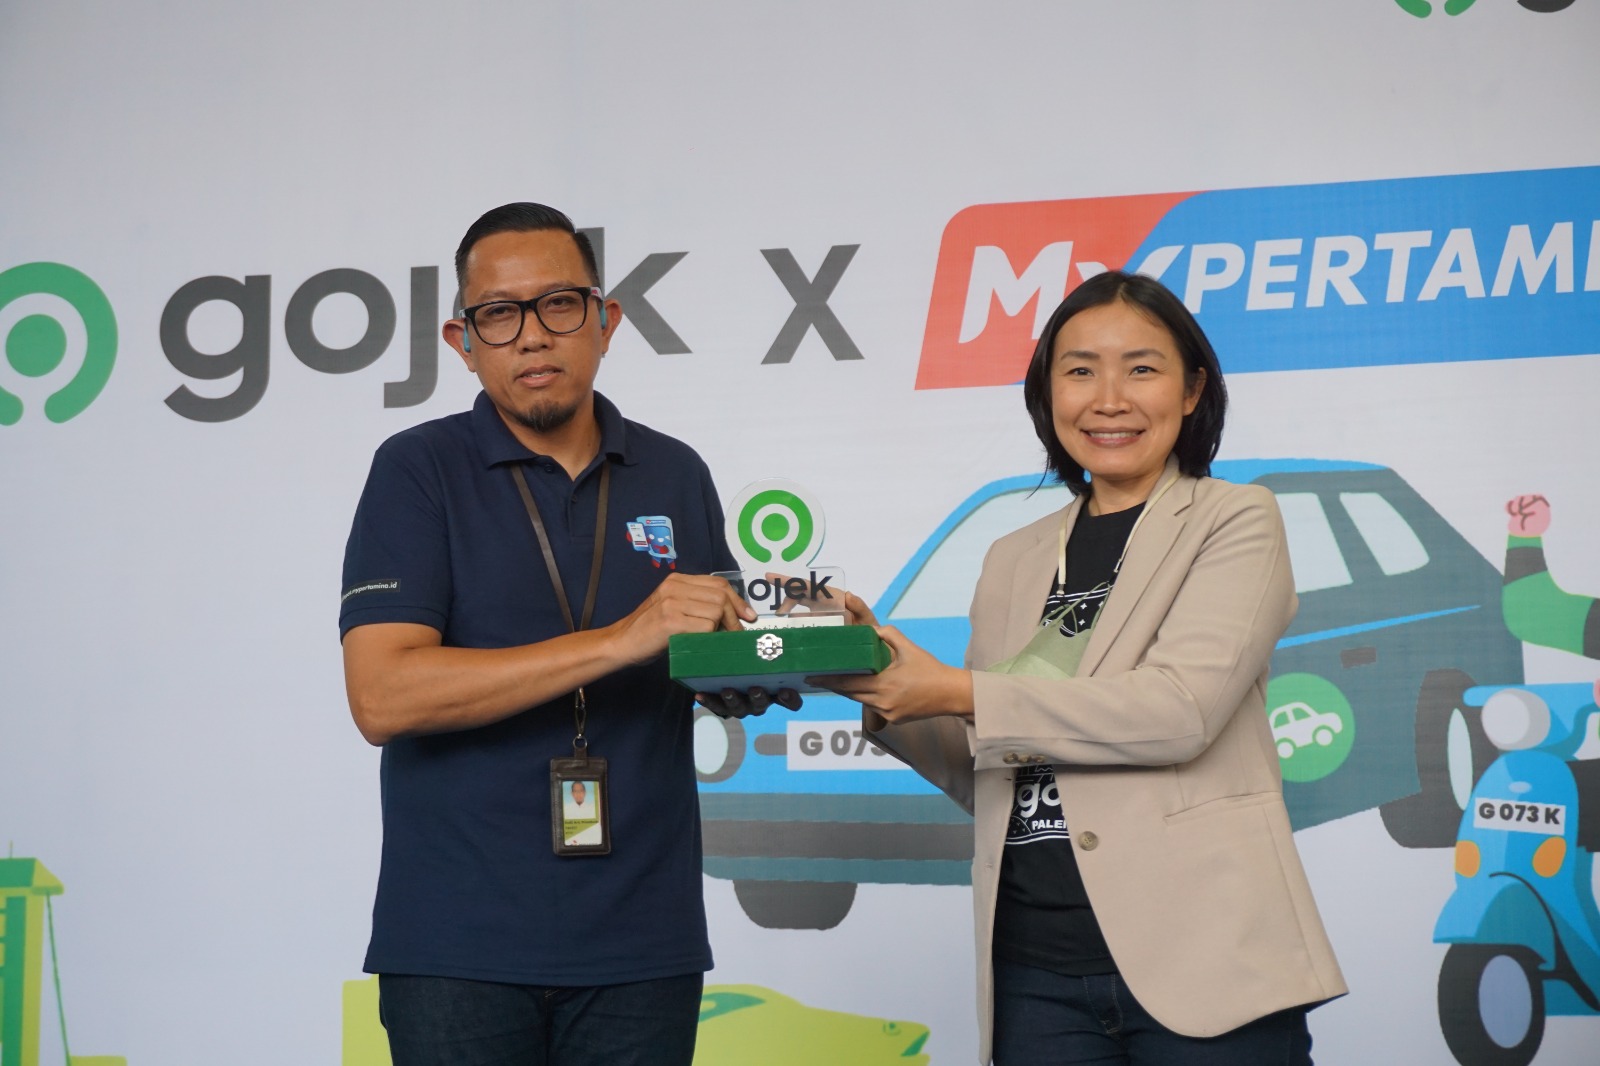 Gojek Palembang Bekerjasama dengan Pertamina Patra Niaga Dorong Transaksi di Aplikasi MyPertamina dengan Gopay